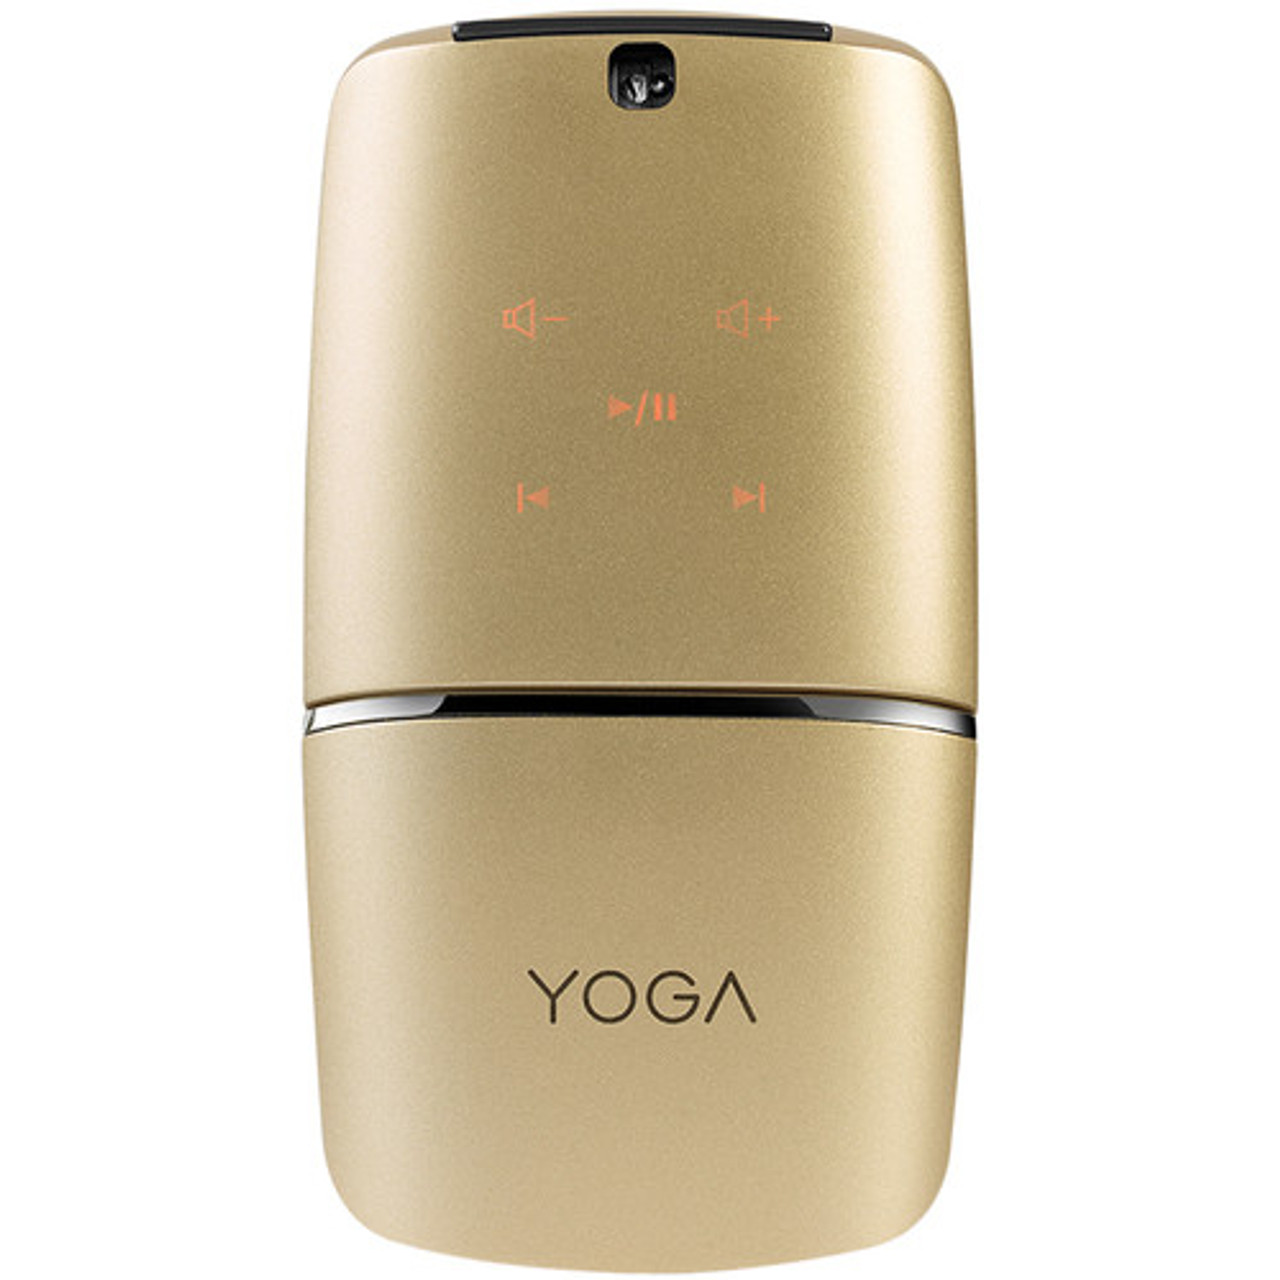 Lenovo Wireless YOGA Silver Mouse - GX30K69568